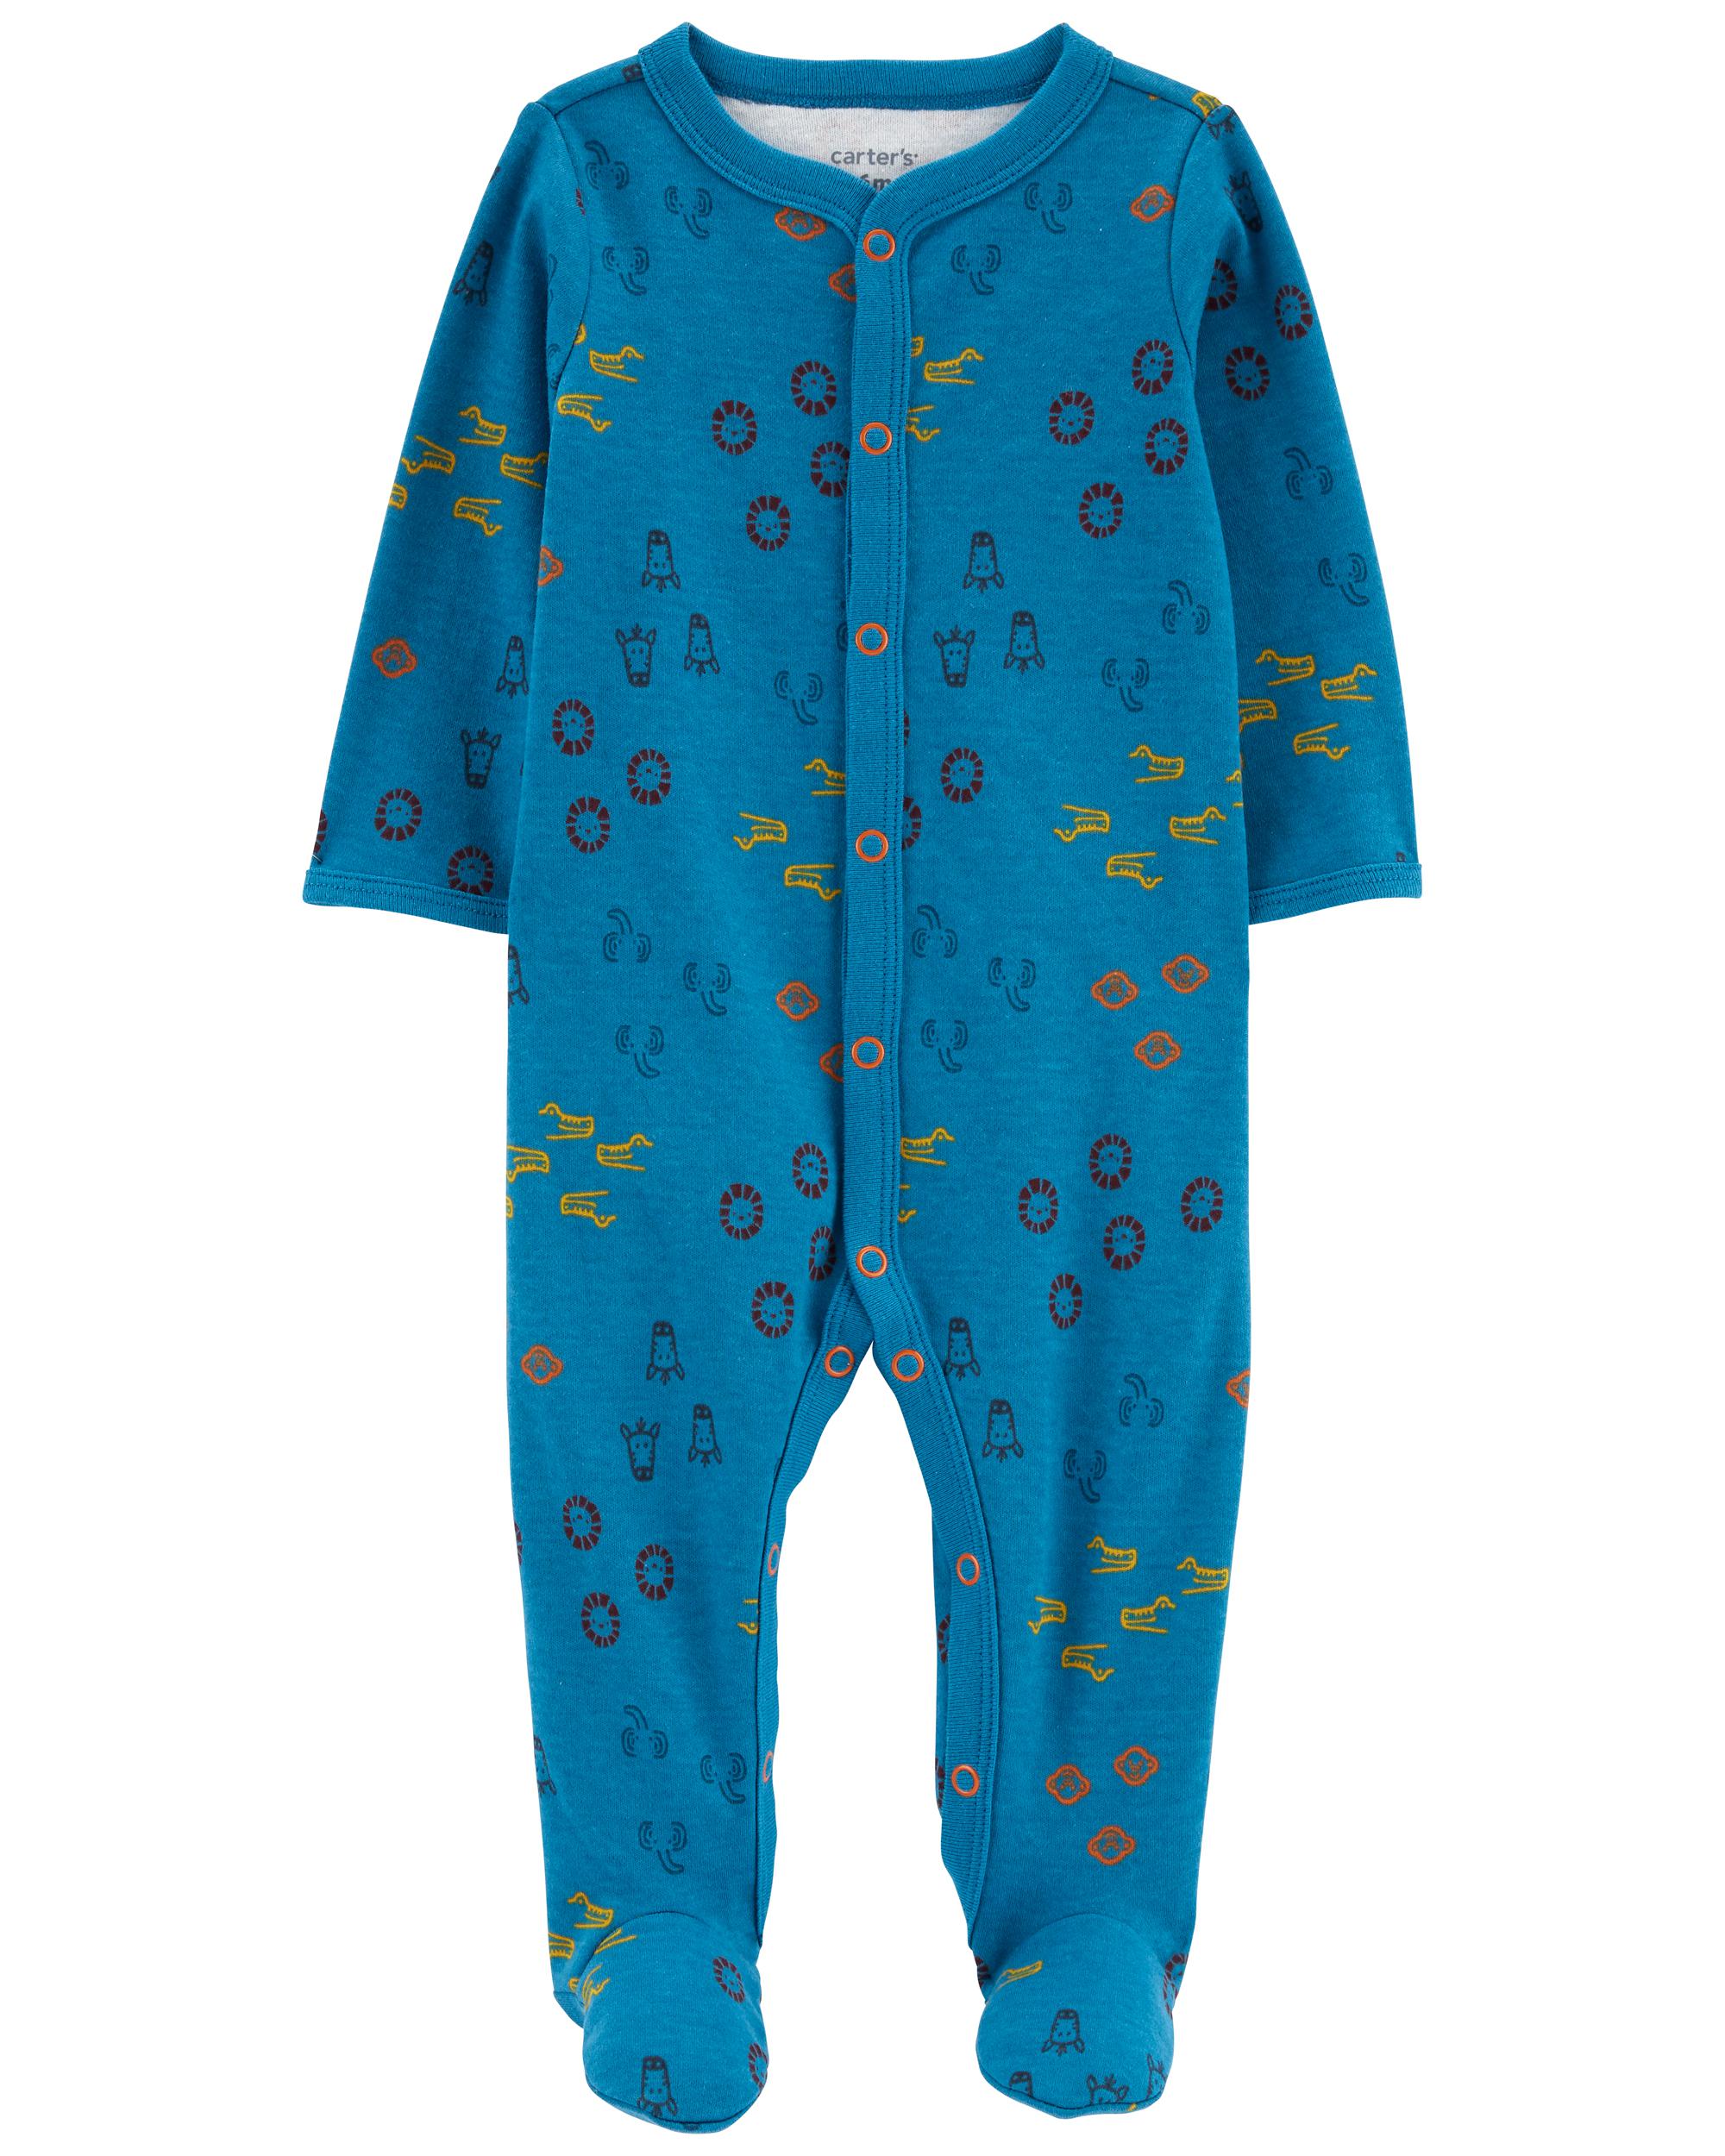 Baby Snap-Up Cotton Sleeper Pyjamas